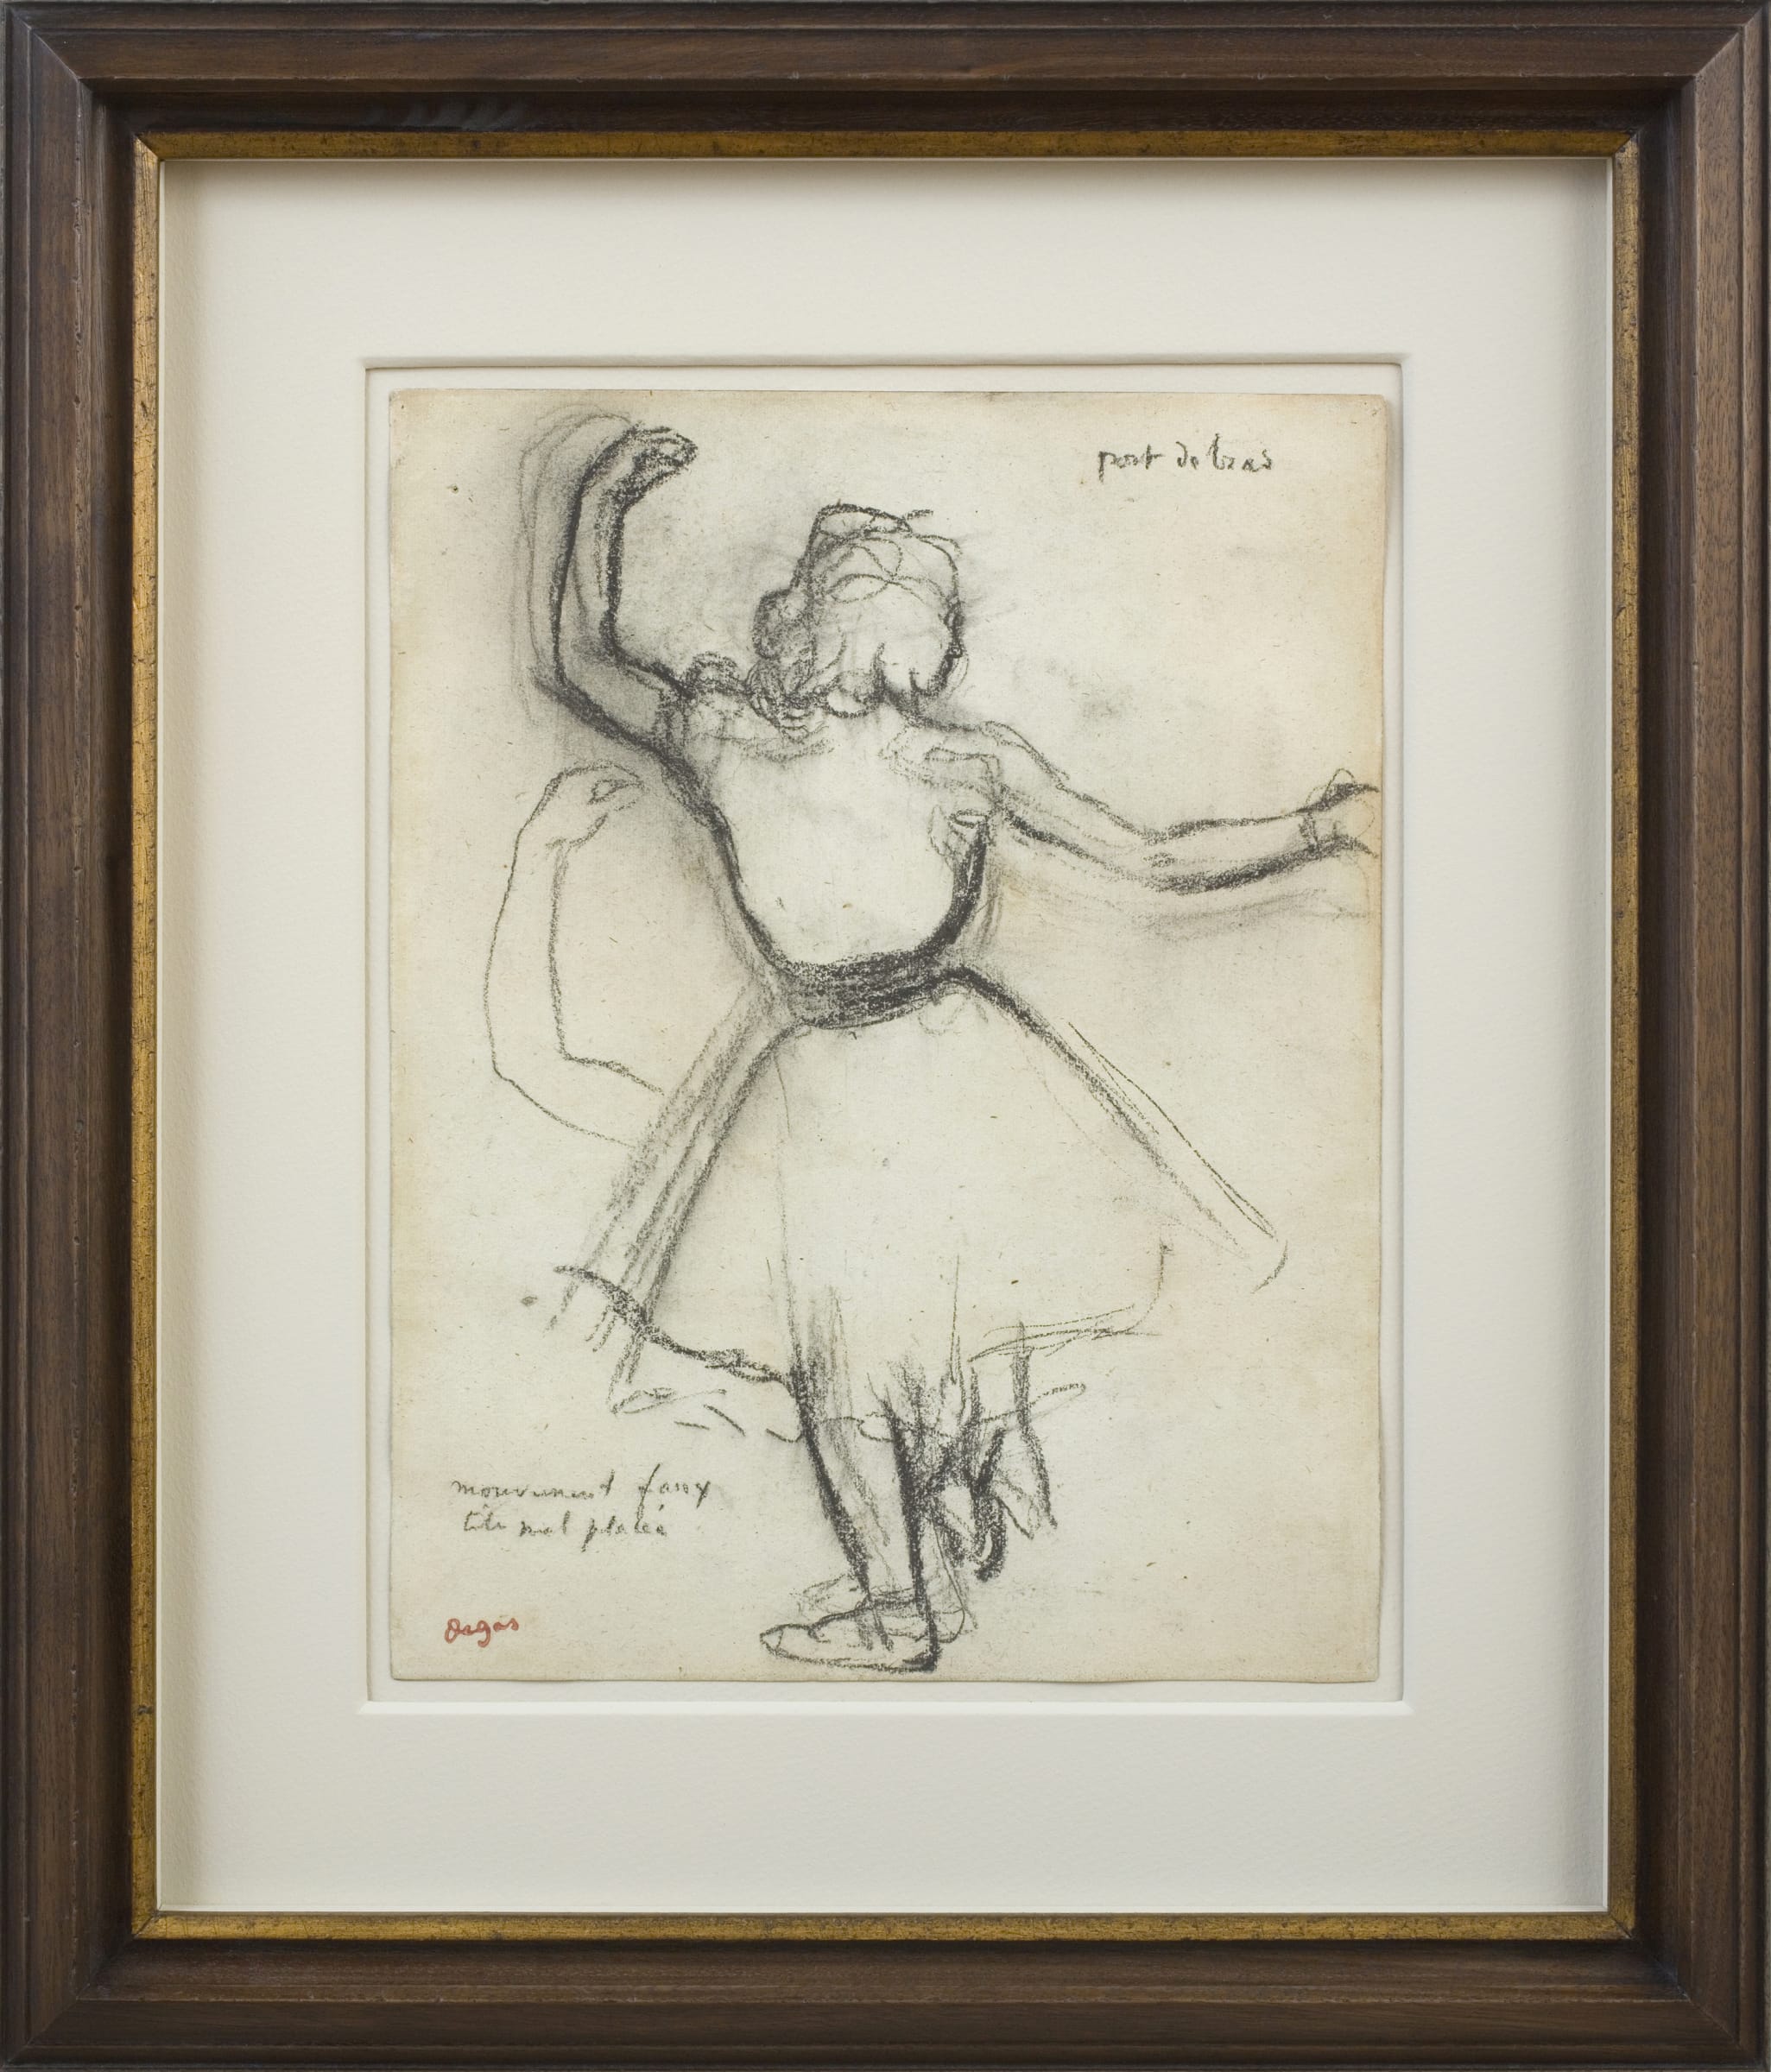 Edgar Degas, Danseuse vue de dos: Port de bras, 1875-85, c